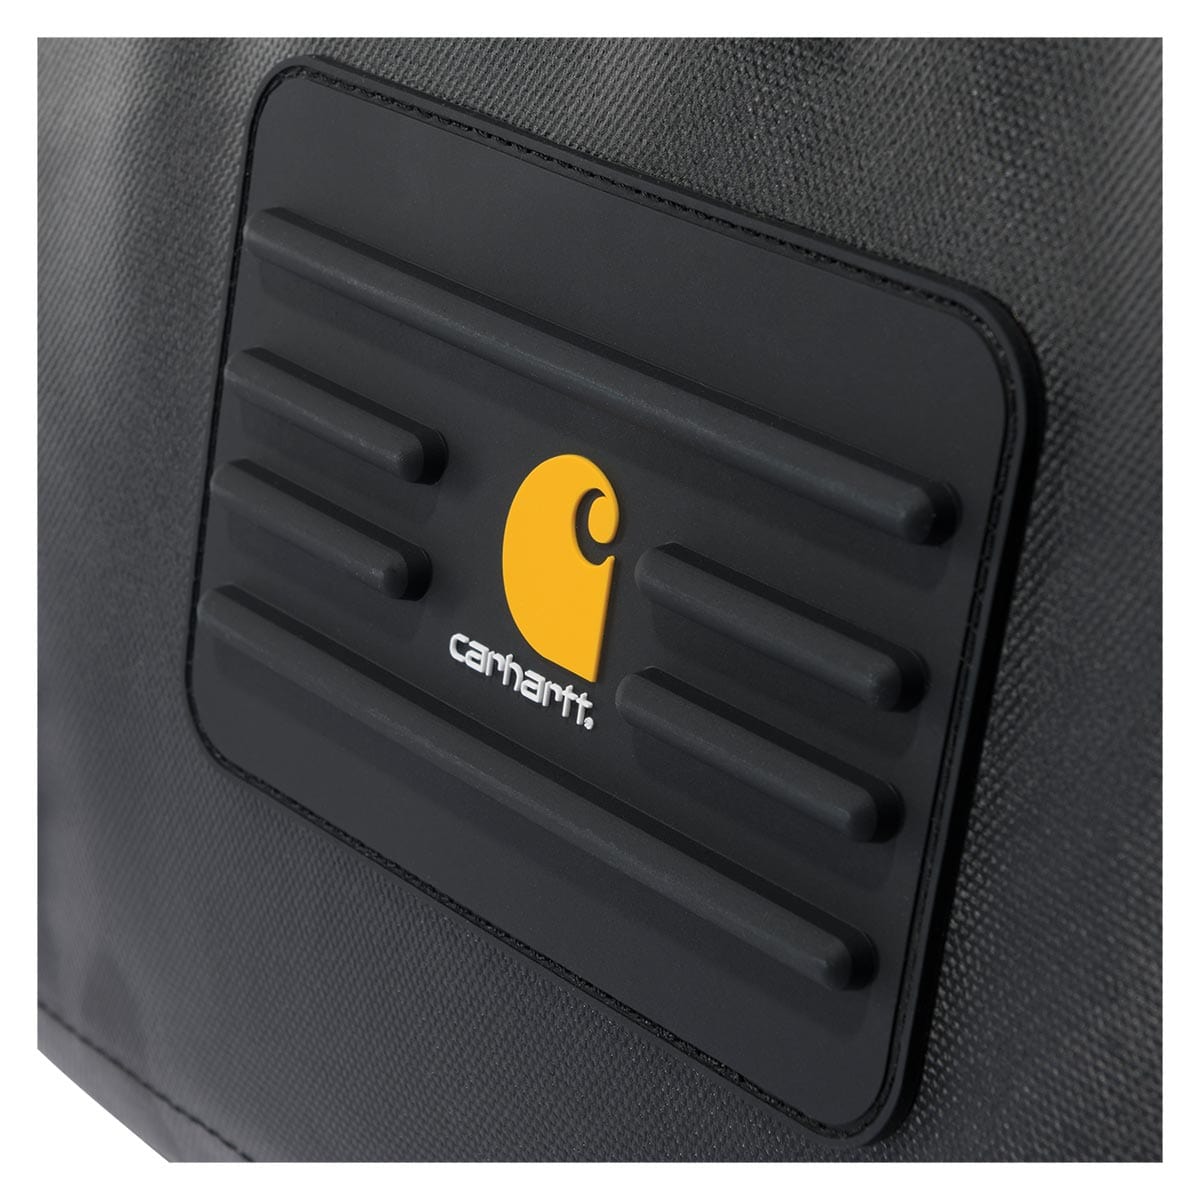 Carhartt 16-inch 30 Pocket Heavyweight Tool Bag